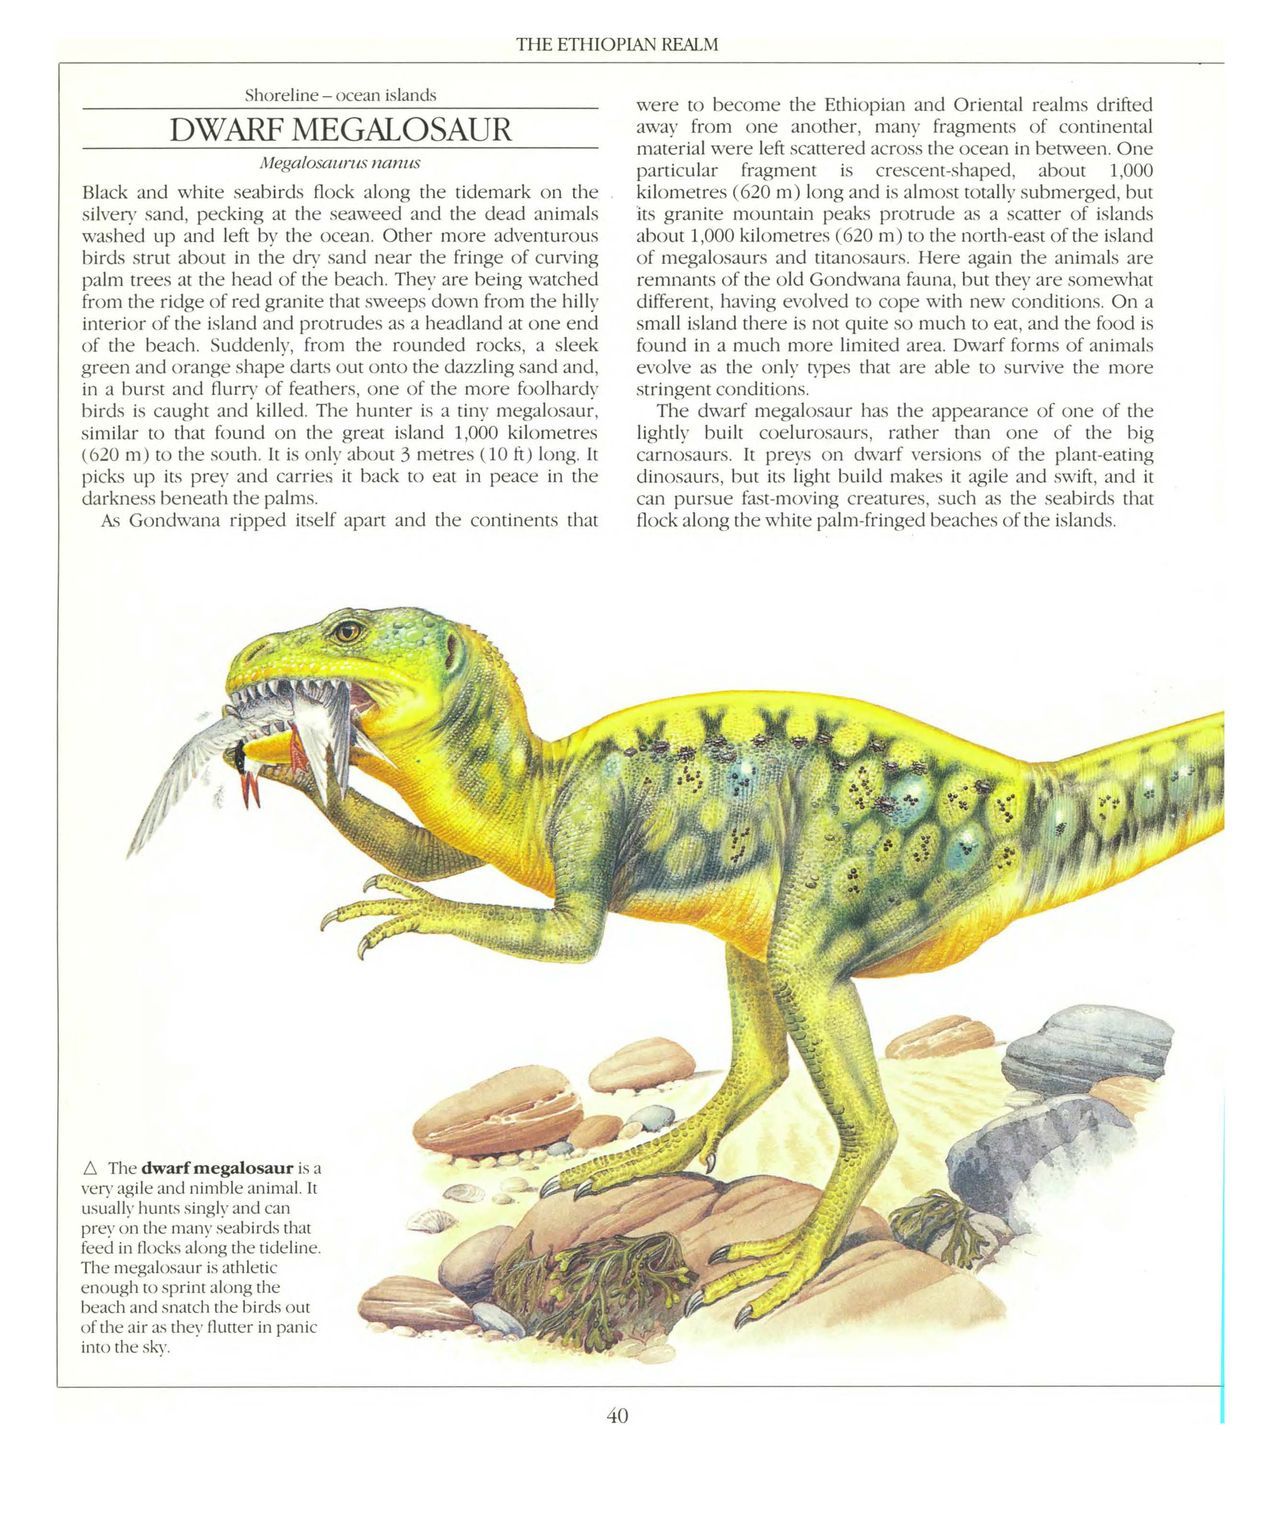 [Dougal Dixon] The New Dinosaurs: An Alternative Evolution 41